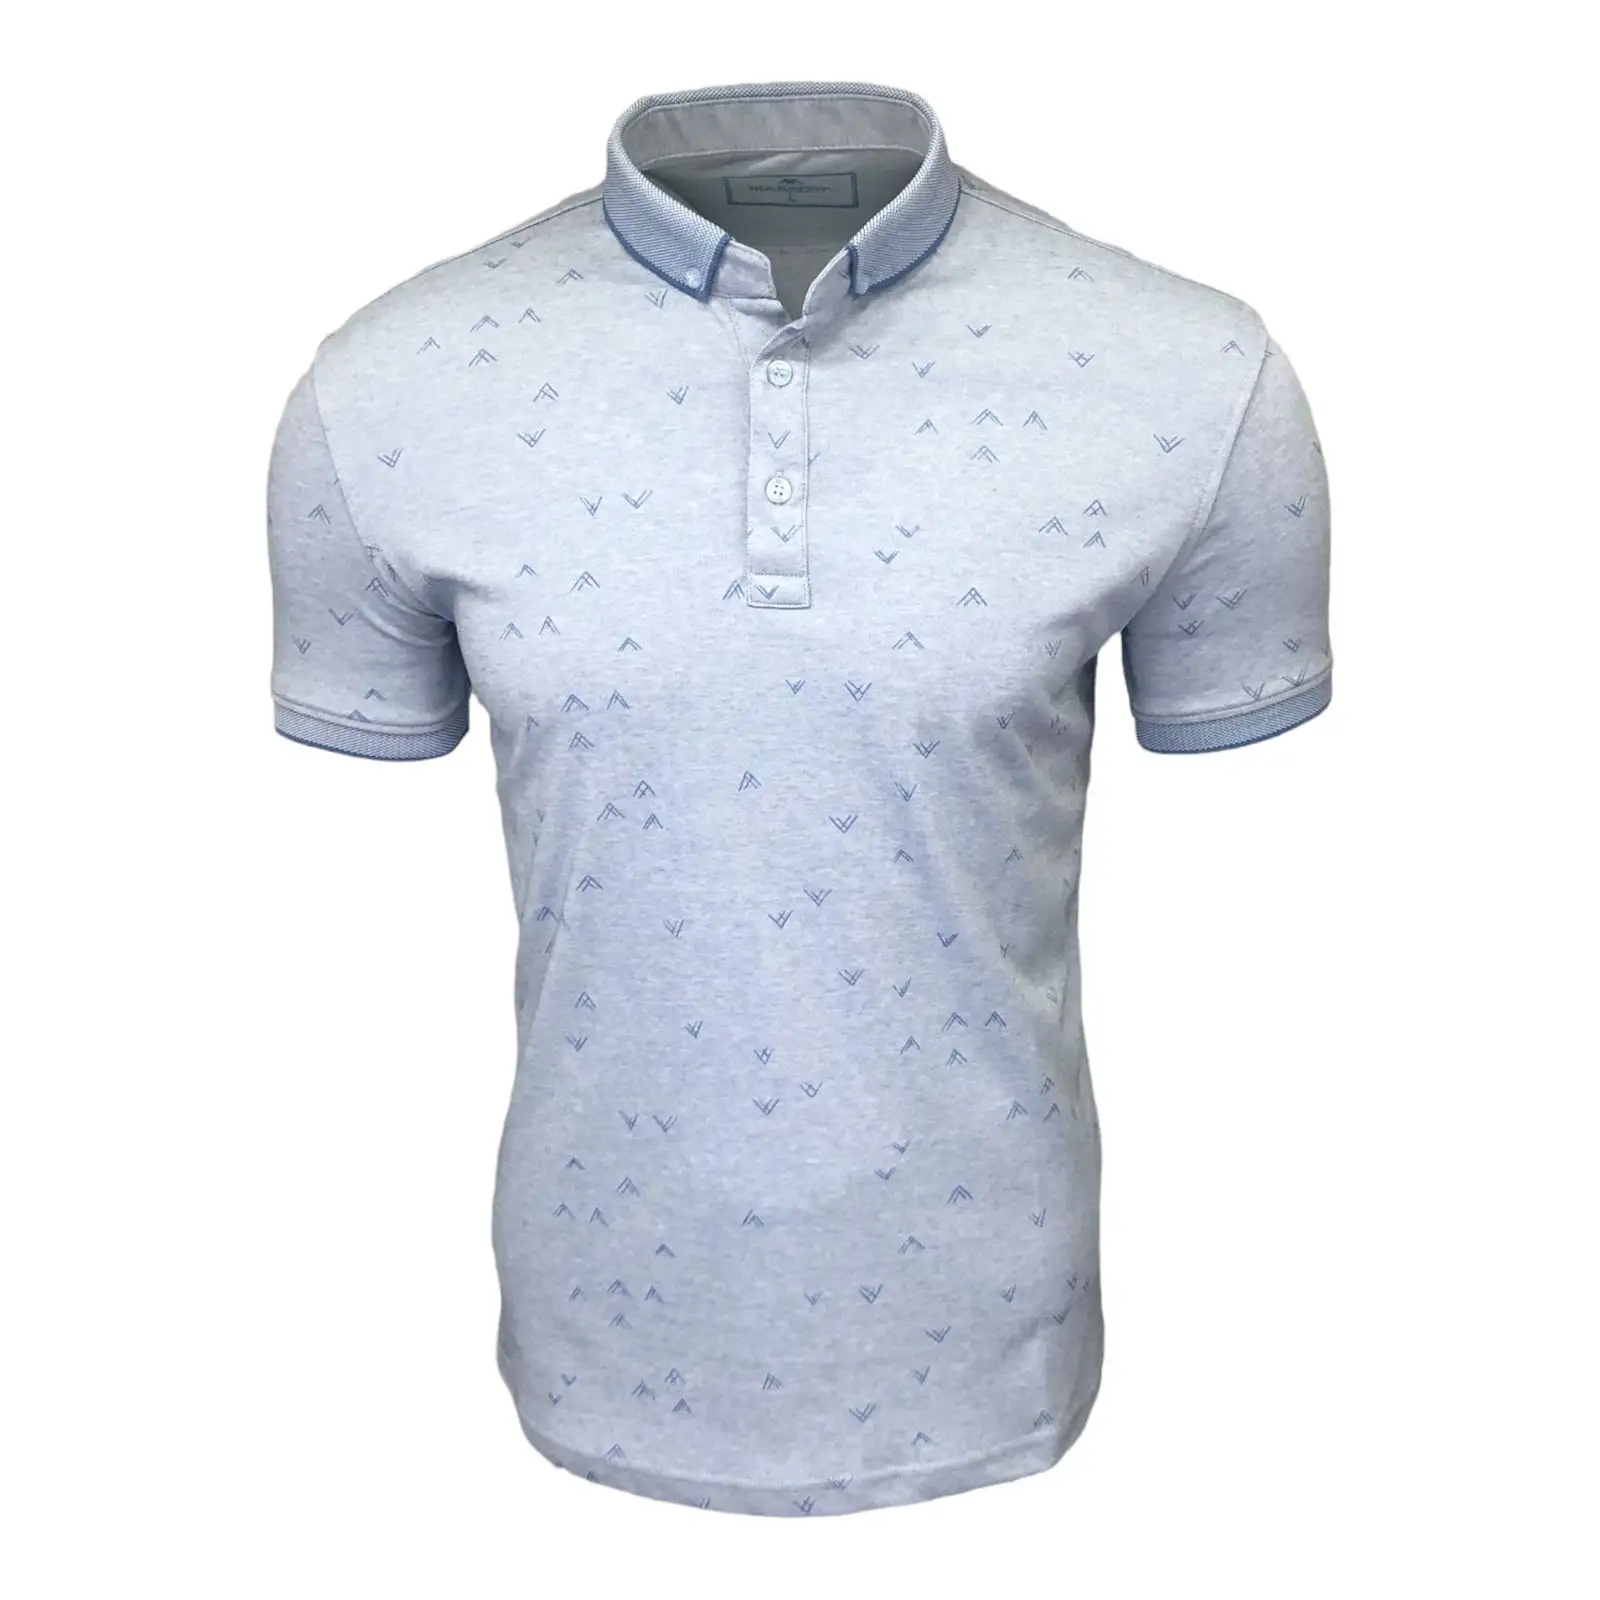 New Season Mens T-shirt Fabric %55 Cotton %45 Polyester High Quality Short Sleeve Sky Blue White Polo Shirt